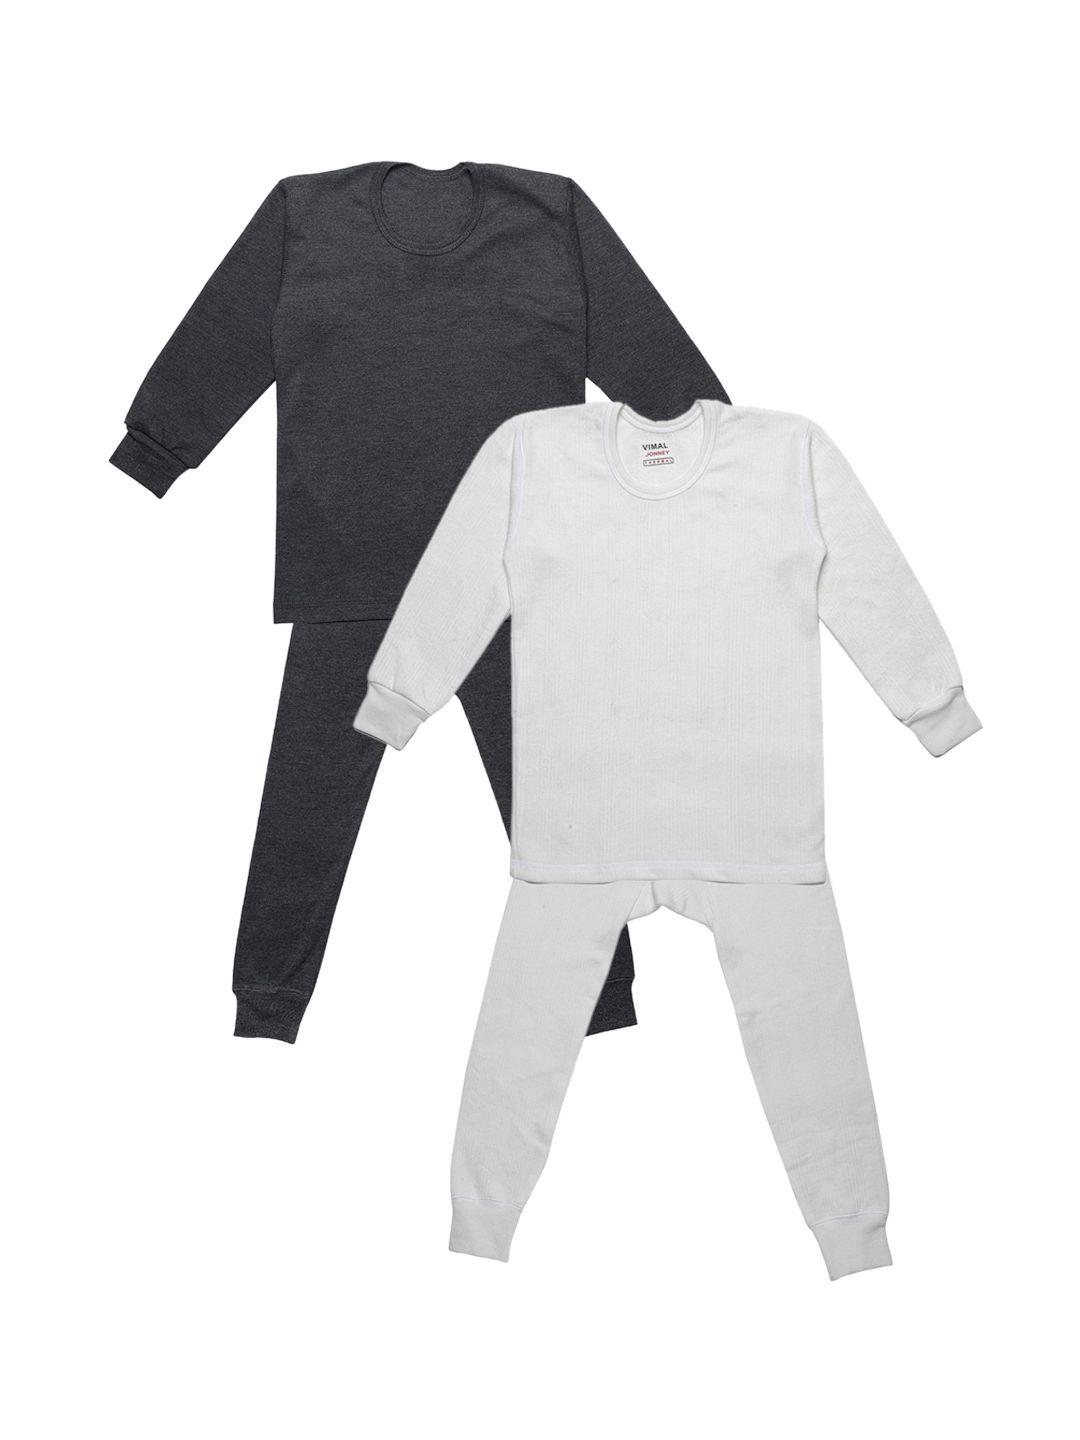 vimal jonney infant kids pack of 2 grey & white solid thermal sets